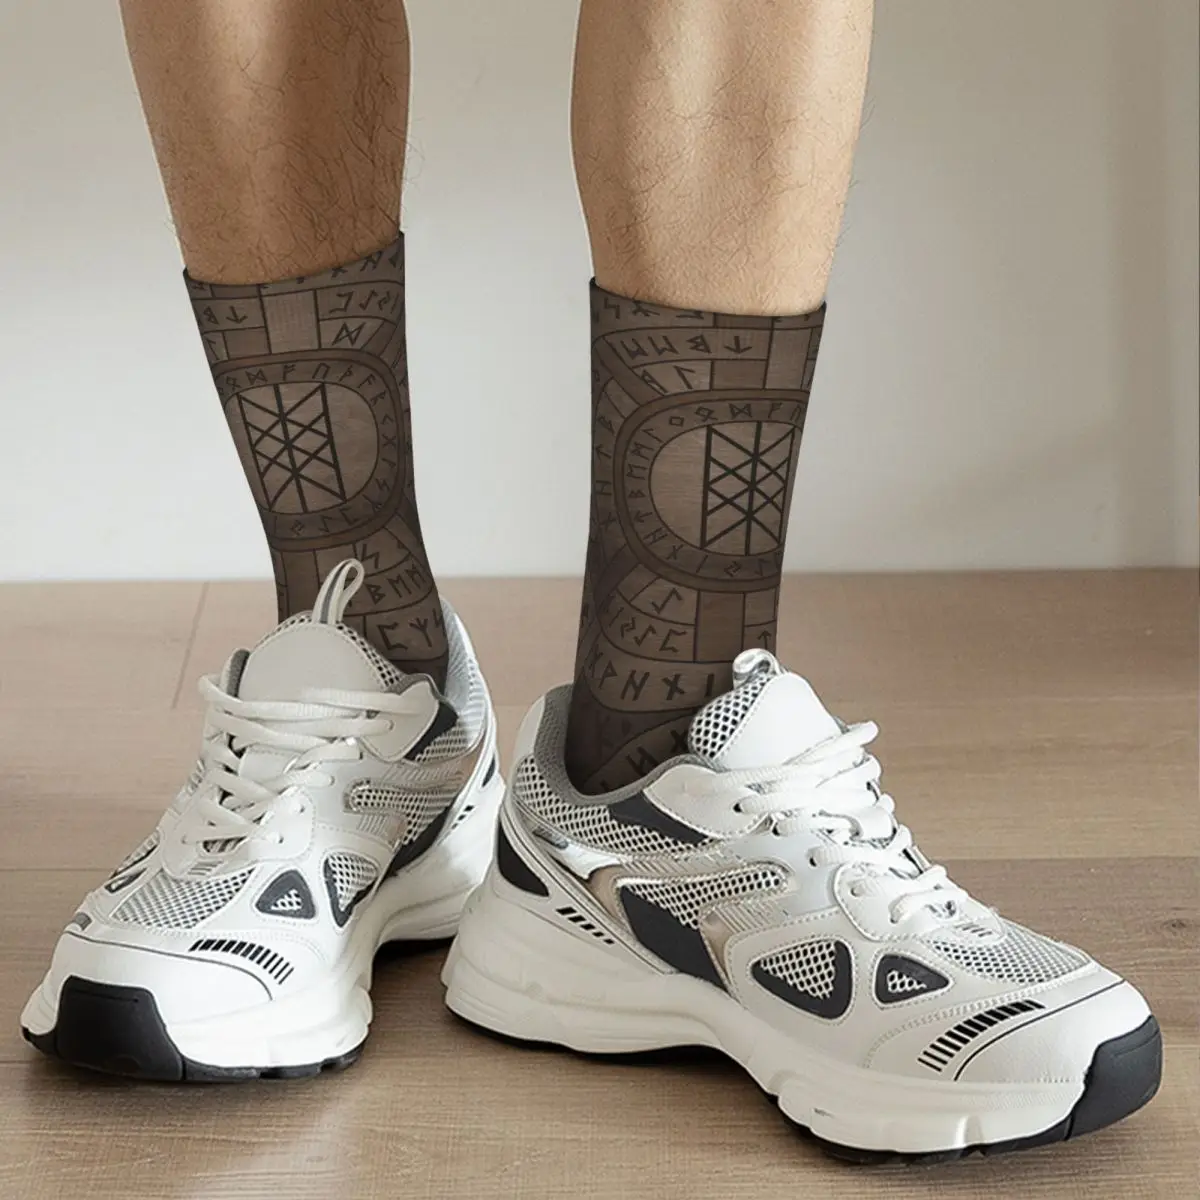 Web Of Wyrd The Matrix Of Fate- Wooden Texture Adult Socks Unisex socks,men Socks women Socks